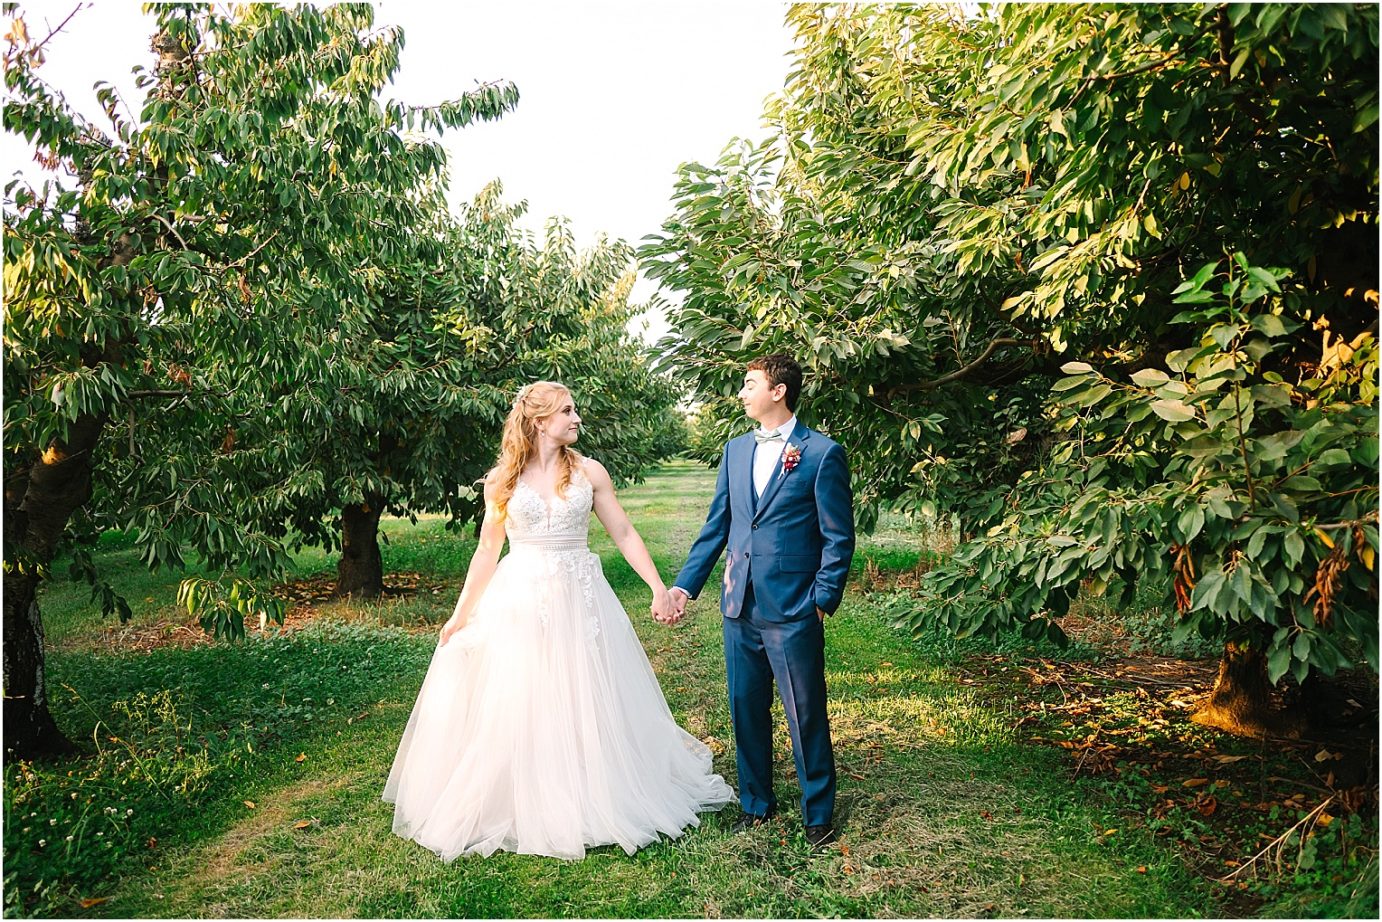 Wedding at Sugar Pine Barn - sunset photos in orchard next door